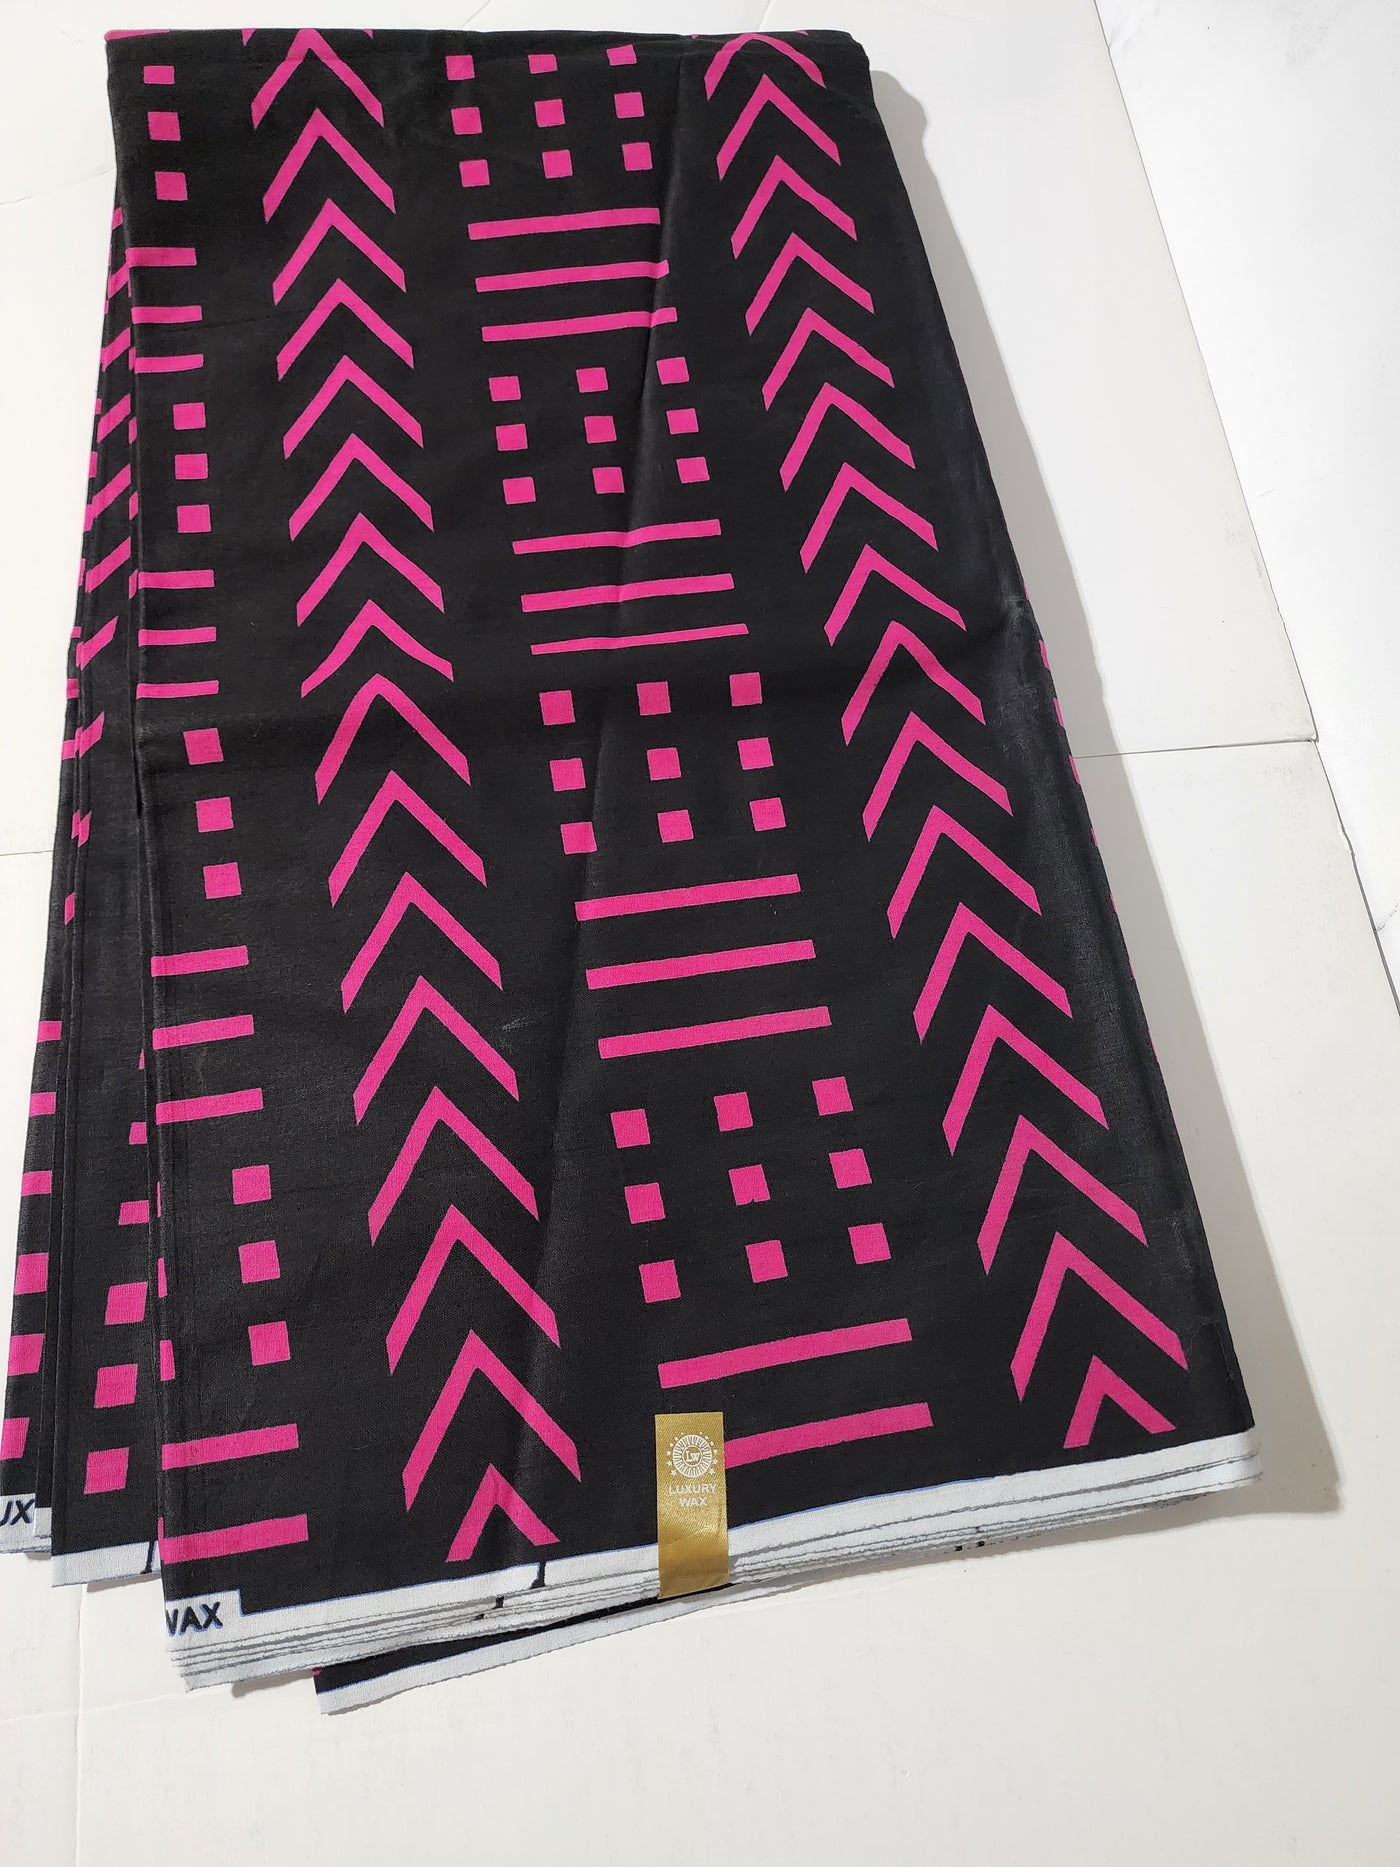 Black and Pink Tribal Ankara Fabric, ACS0202